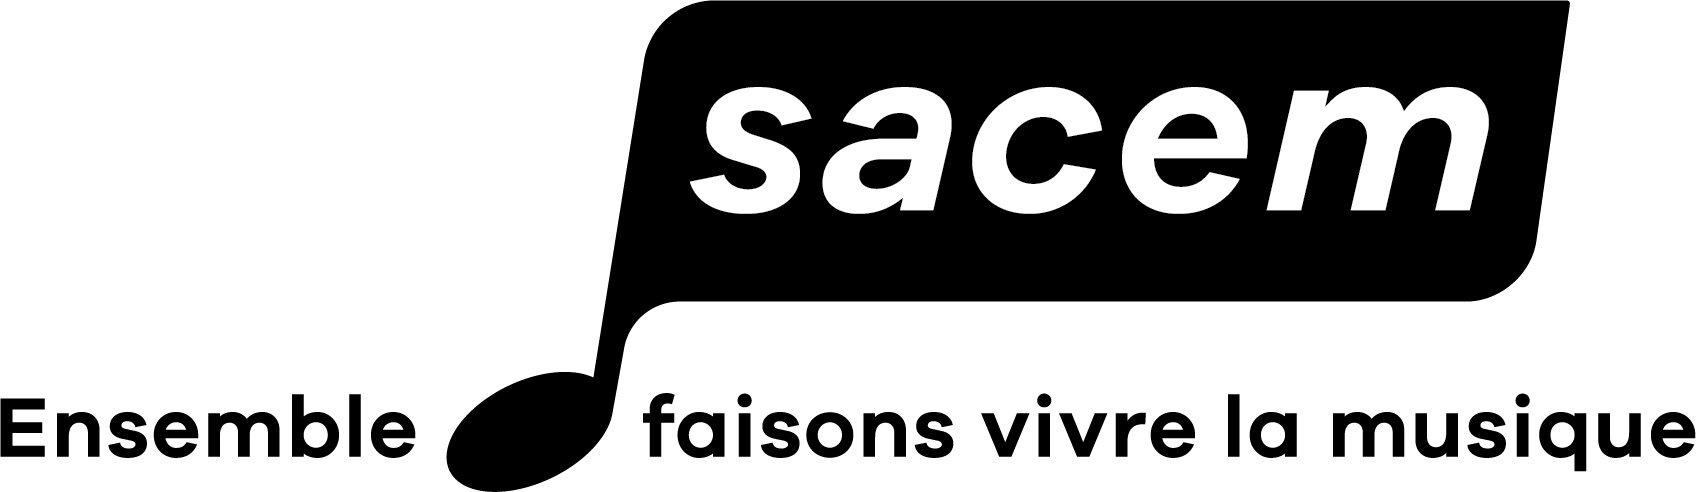 Sacem_logo_vertical_NB.jpg